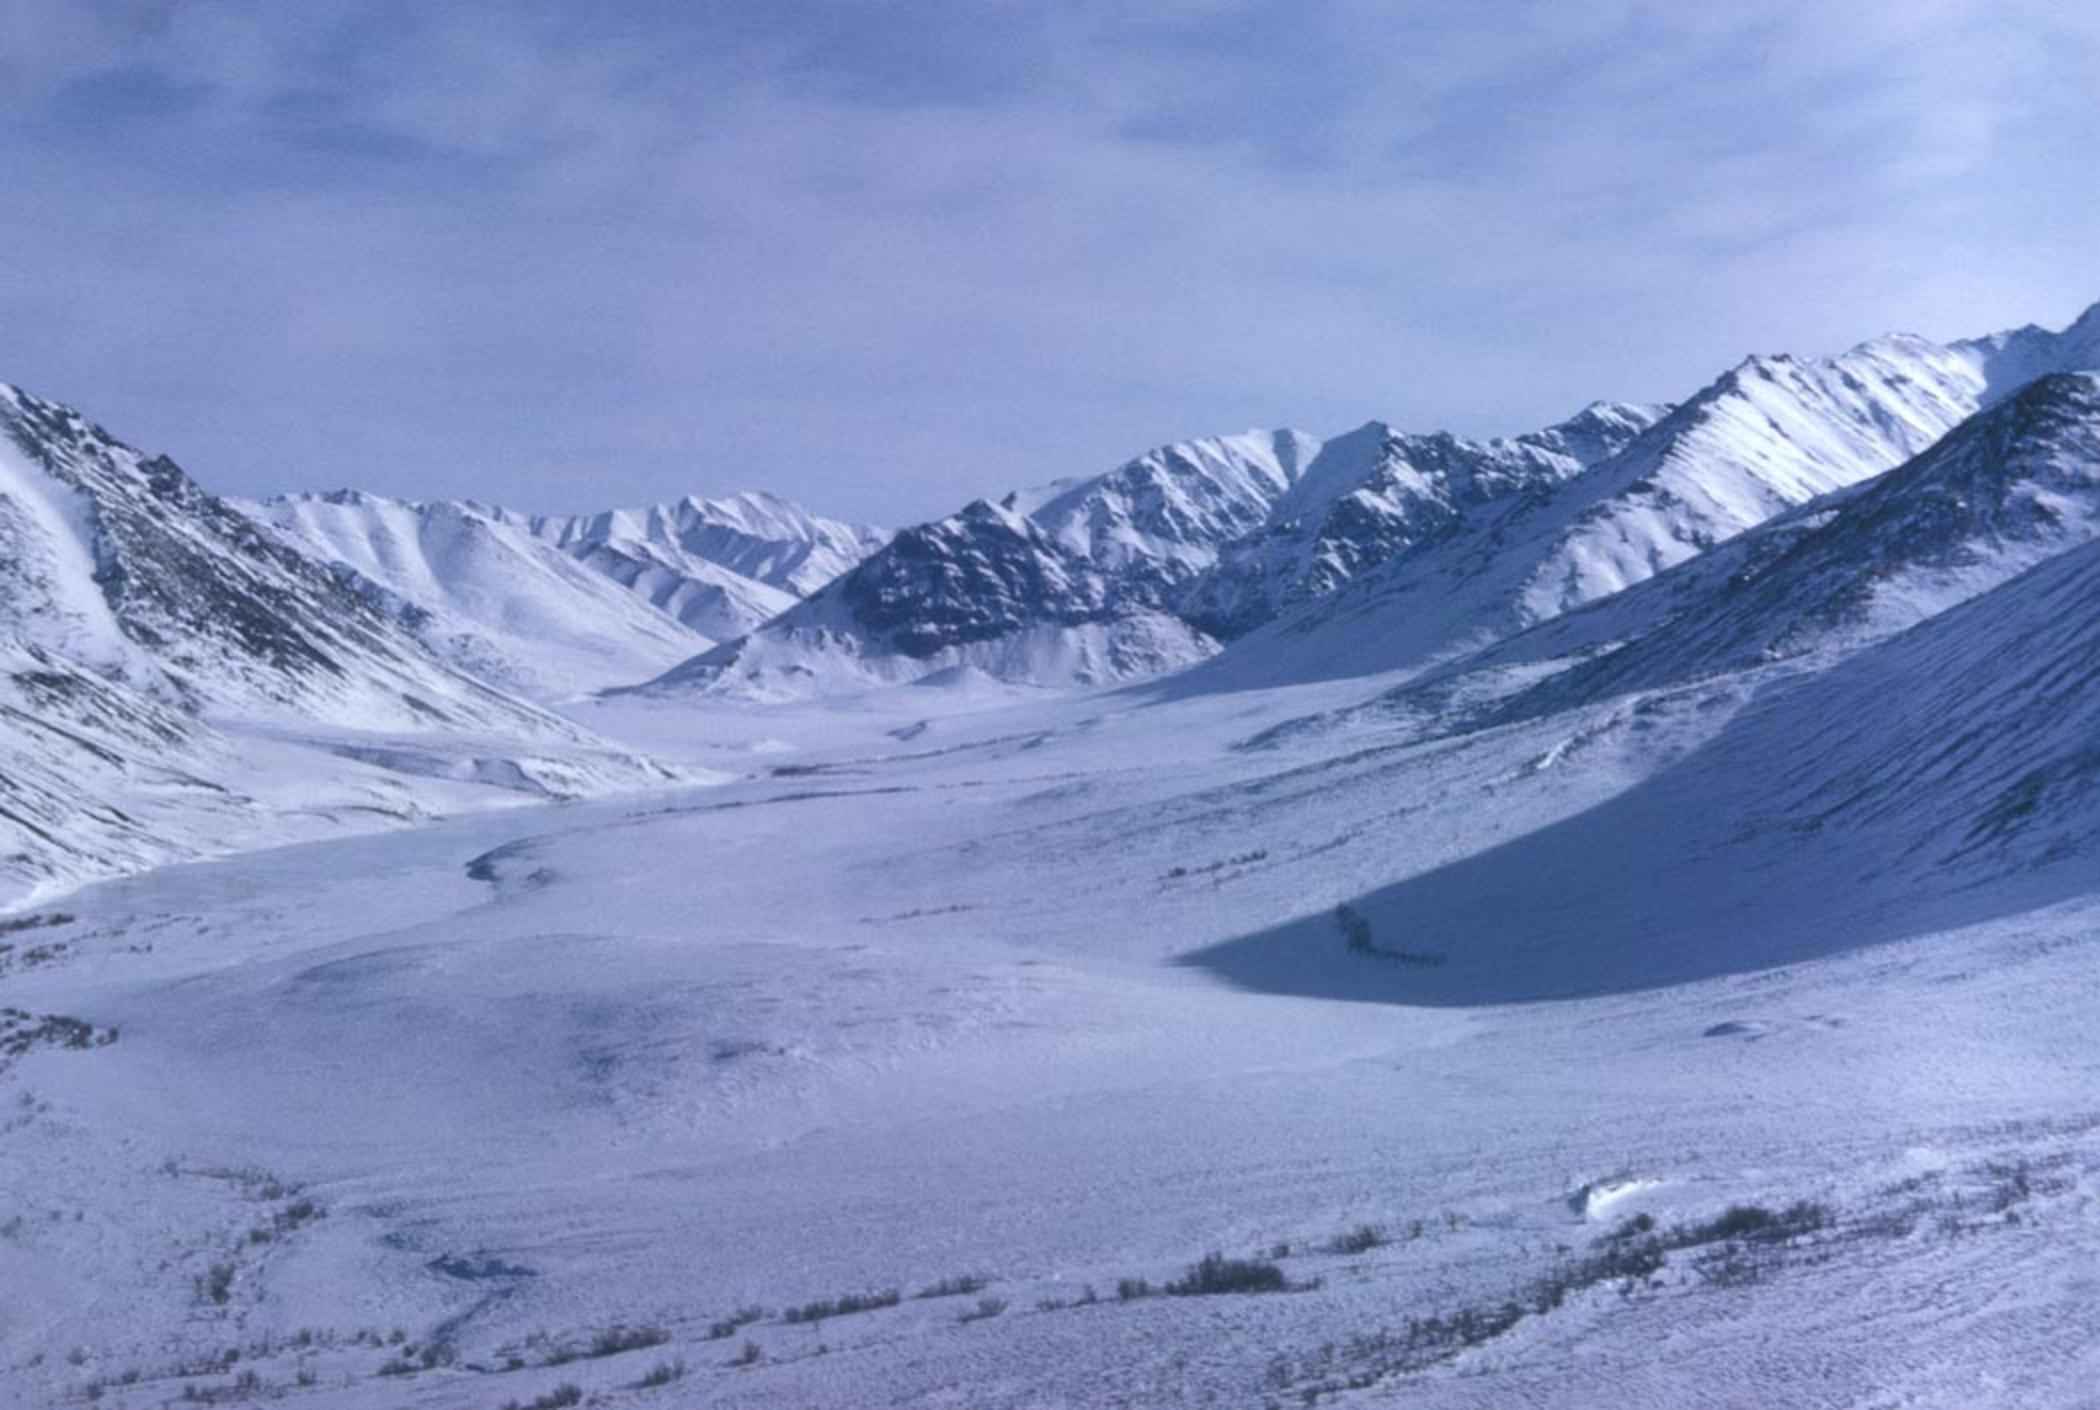 File:Frozen mountains.jpg - Wikimedia Commons